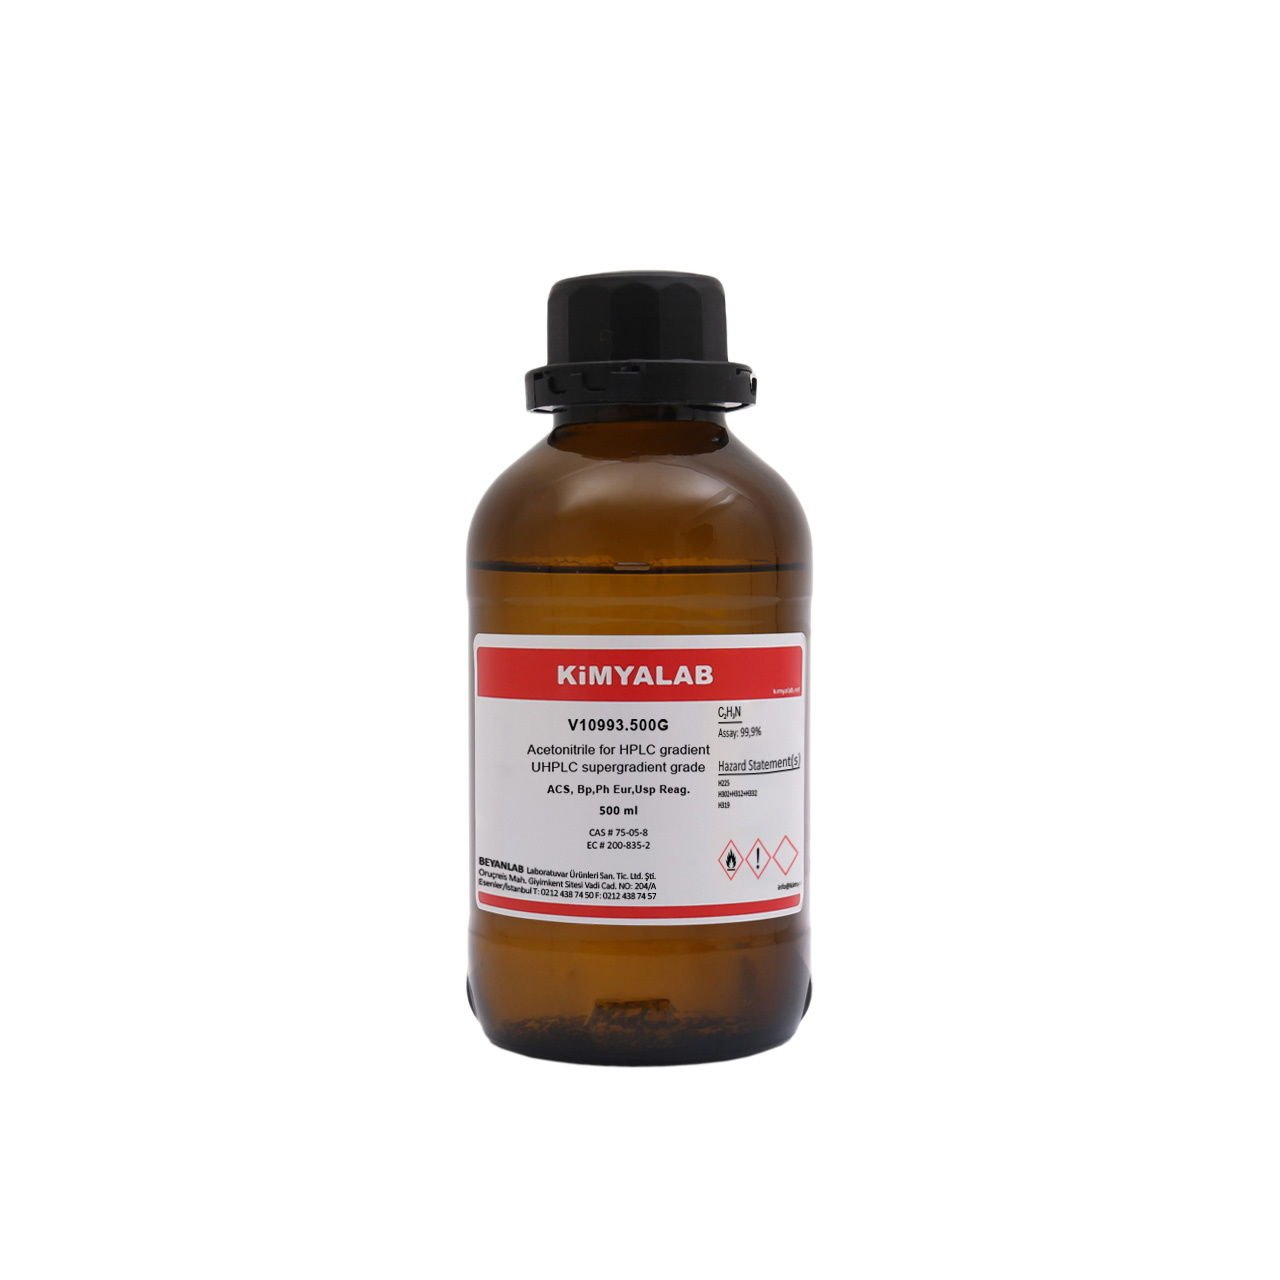 Kimyalab Asetonitril 500ml - Acetonitrile Reag Ph Eur for HPLC ACS